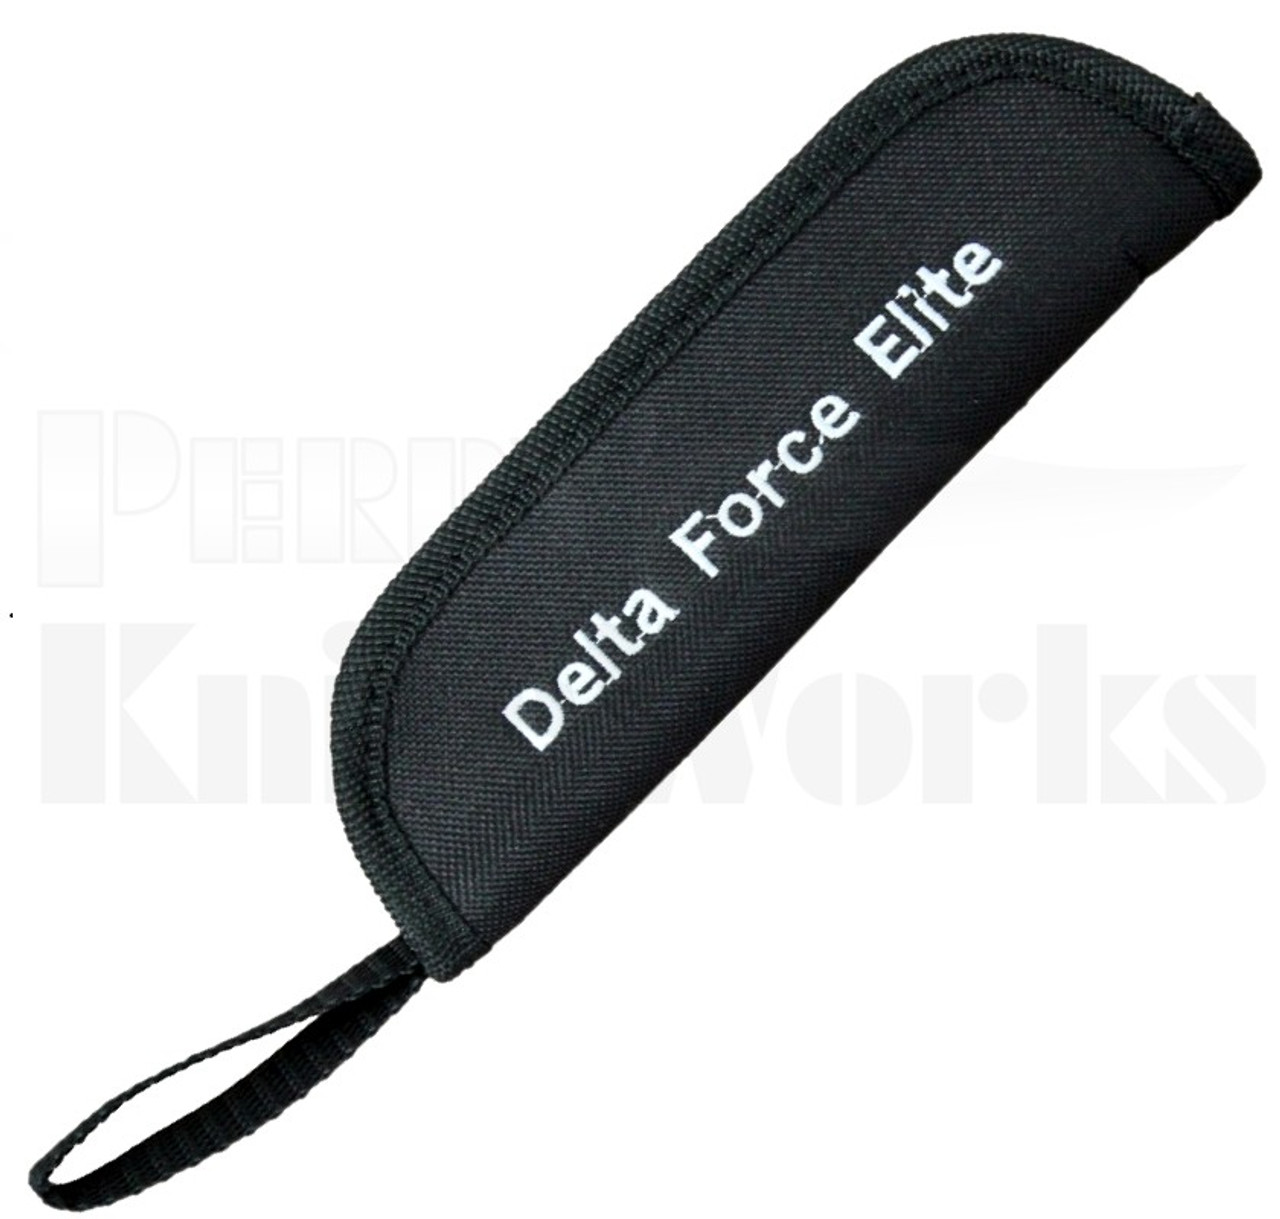 Delta Force Elite Model-C Tanto Automatic Knife Blue l 3.5" Blade l Pouch